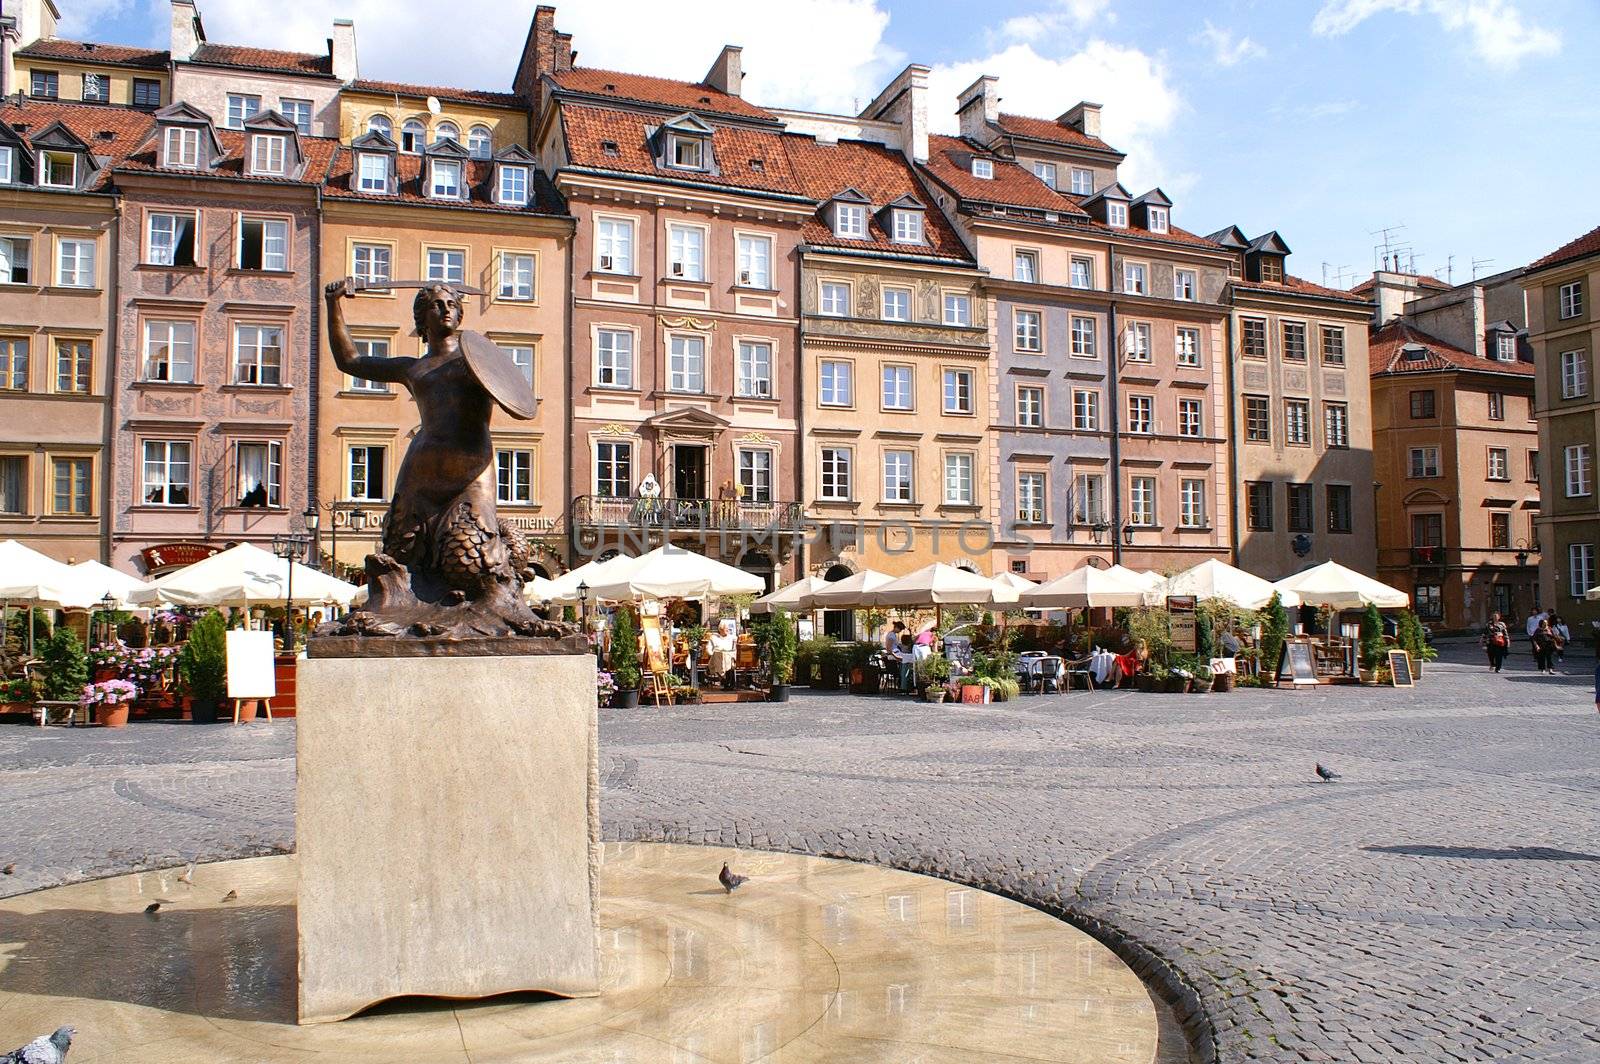 Mermaid symbol of Warsaw, old town, Poland